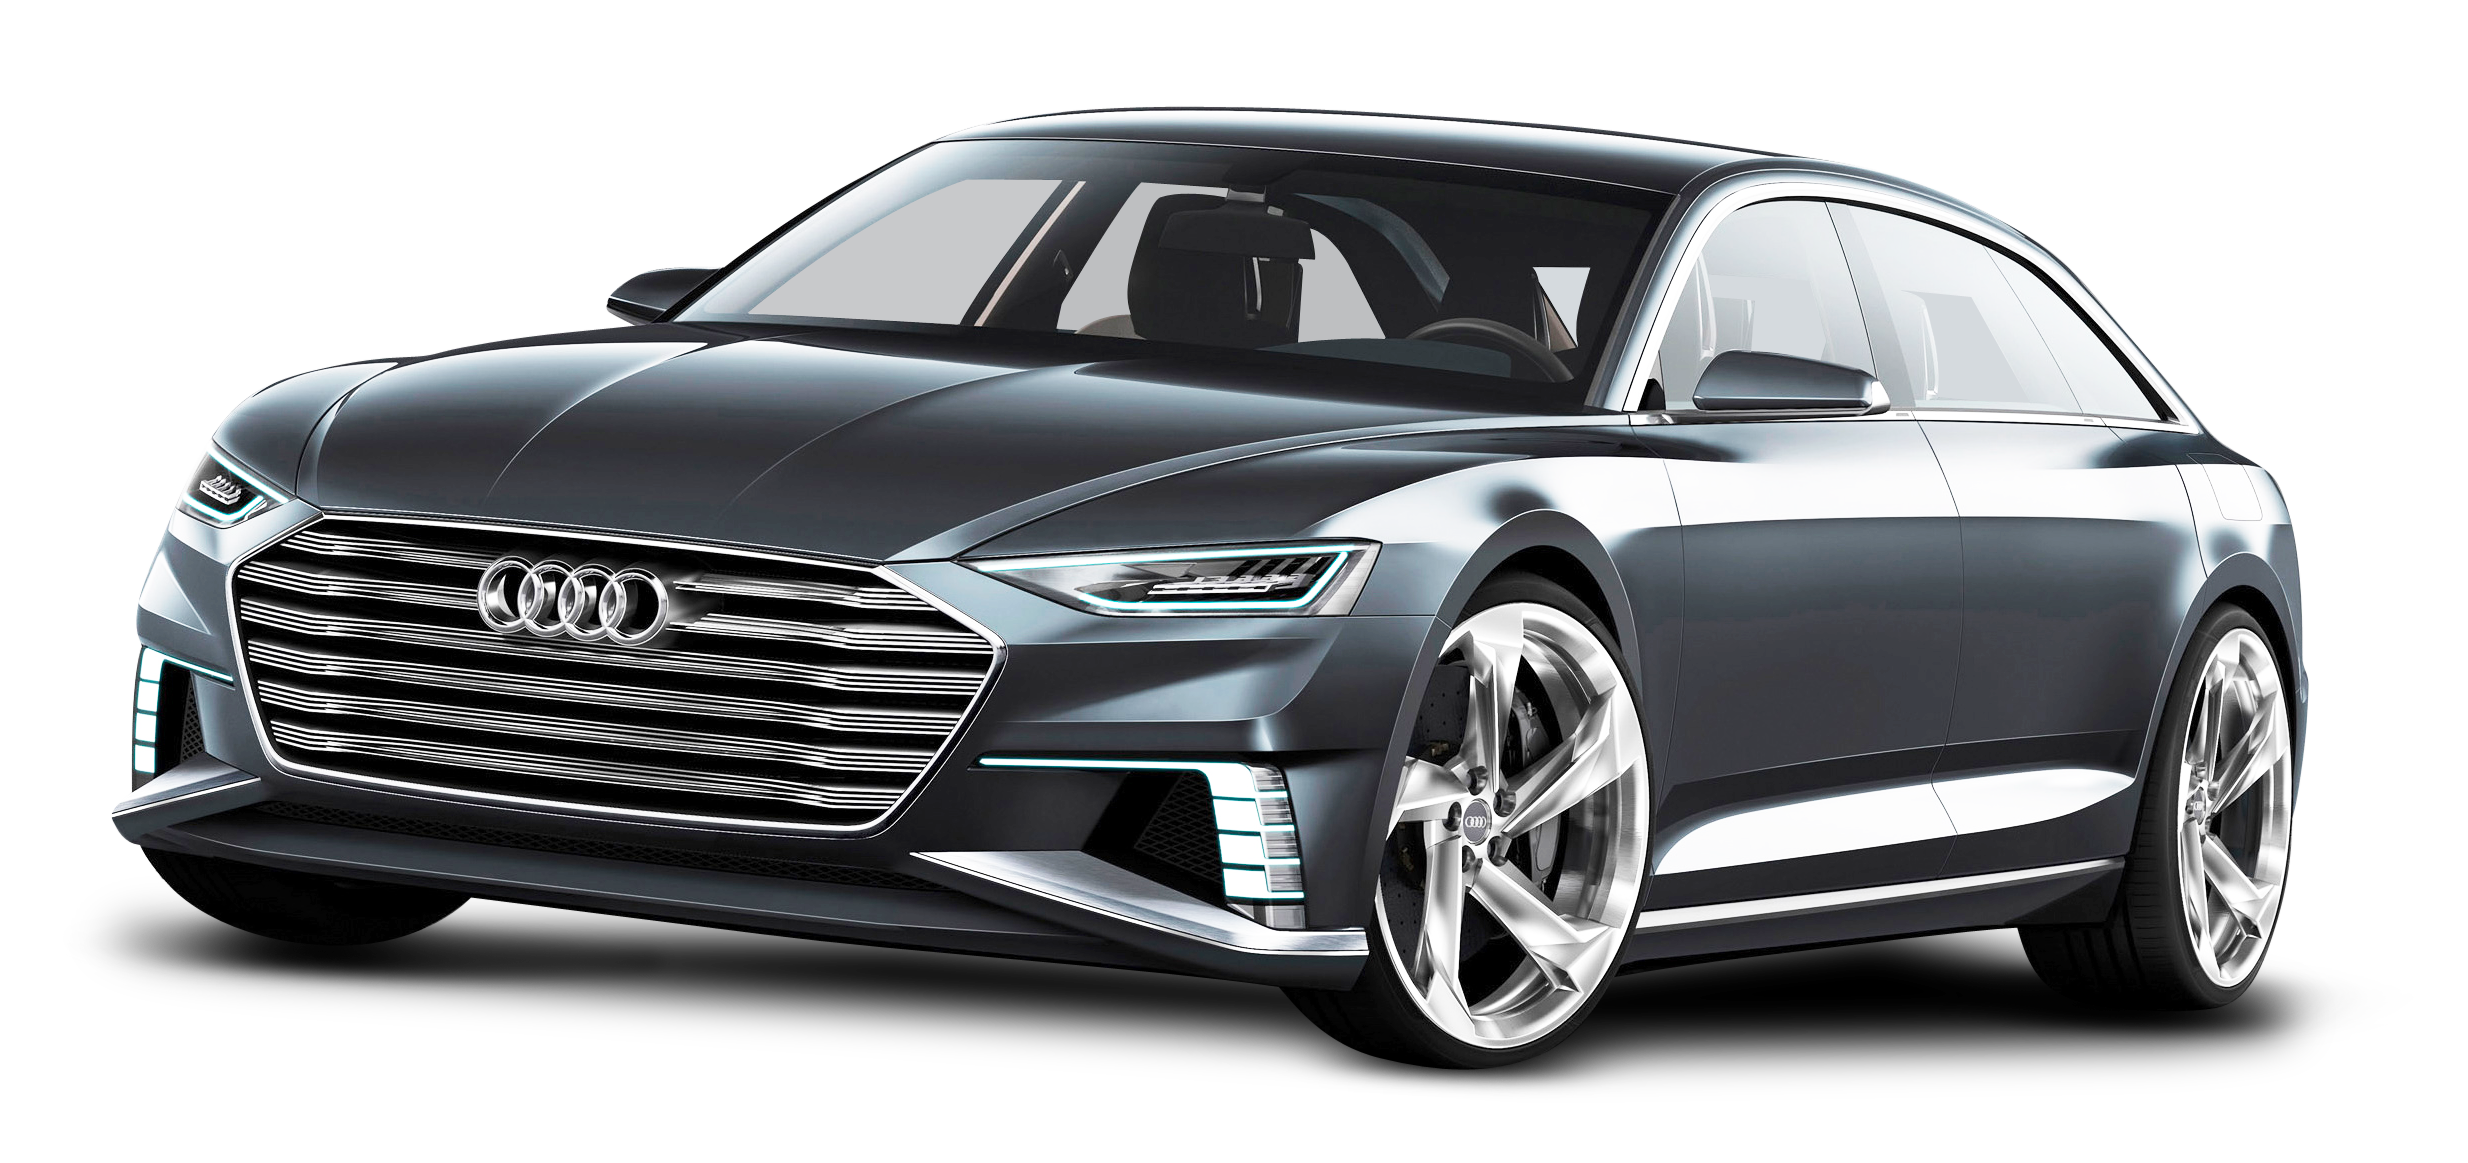 Grey Audi Prologue Avant Car Png Image Purepng Free Transparent Cc0